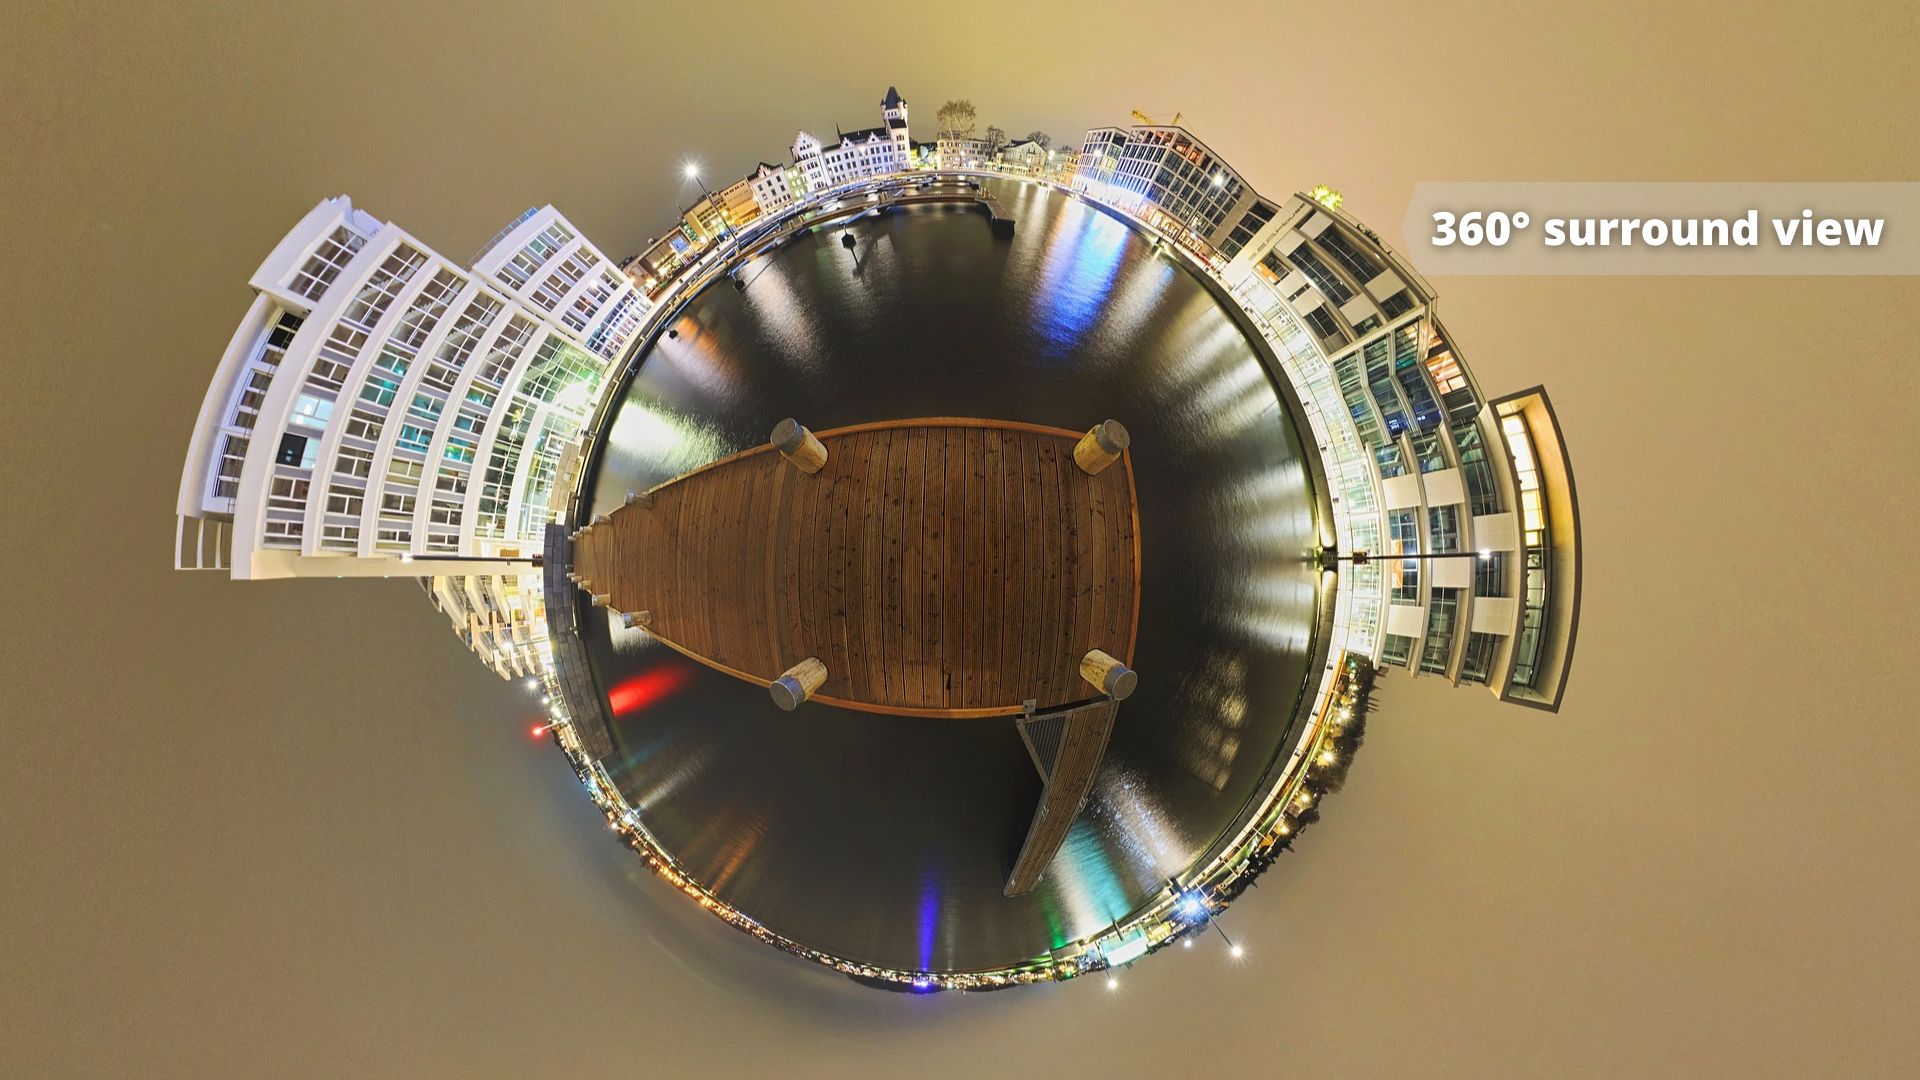 AI-powered 360 degree surround view